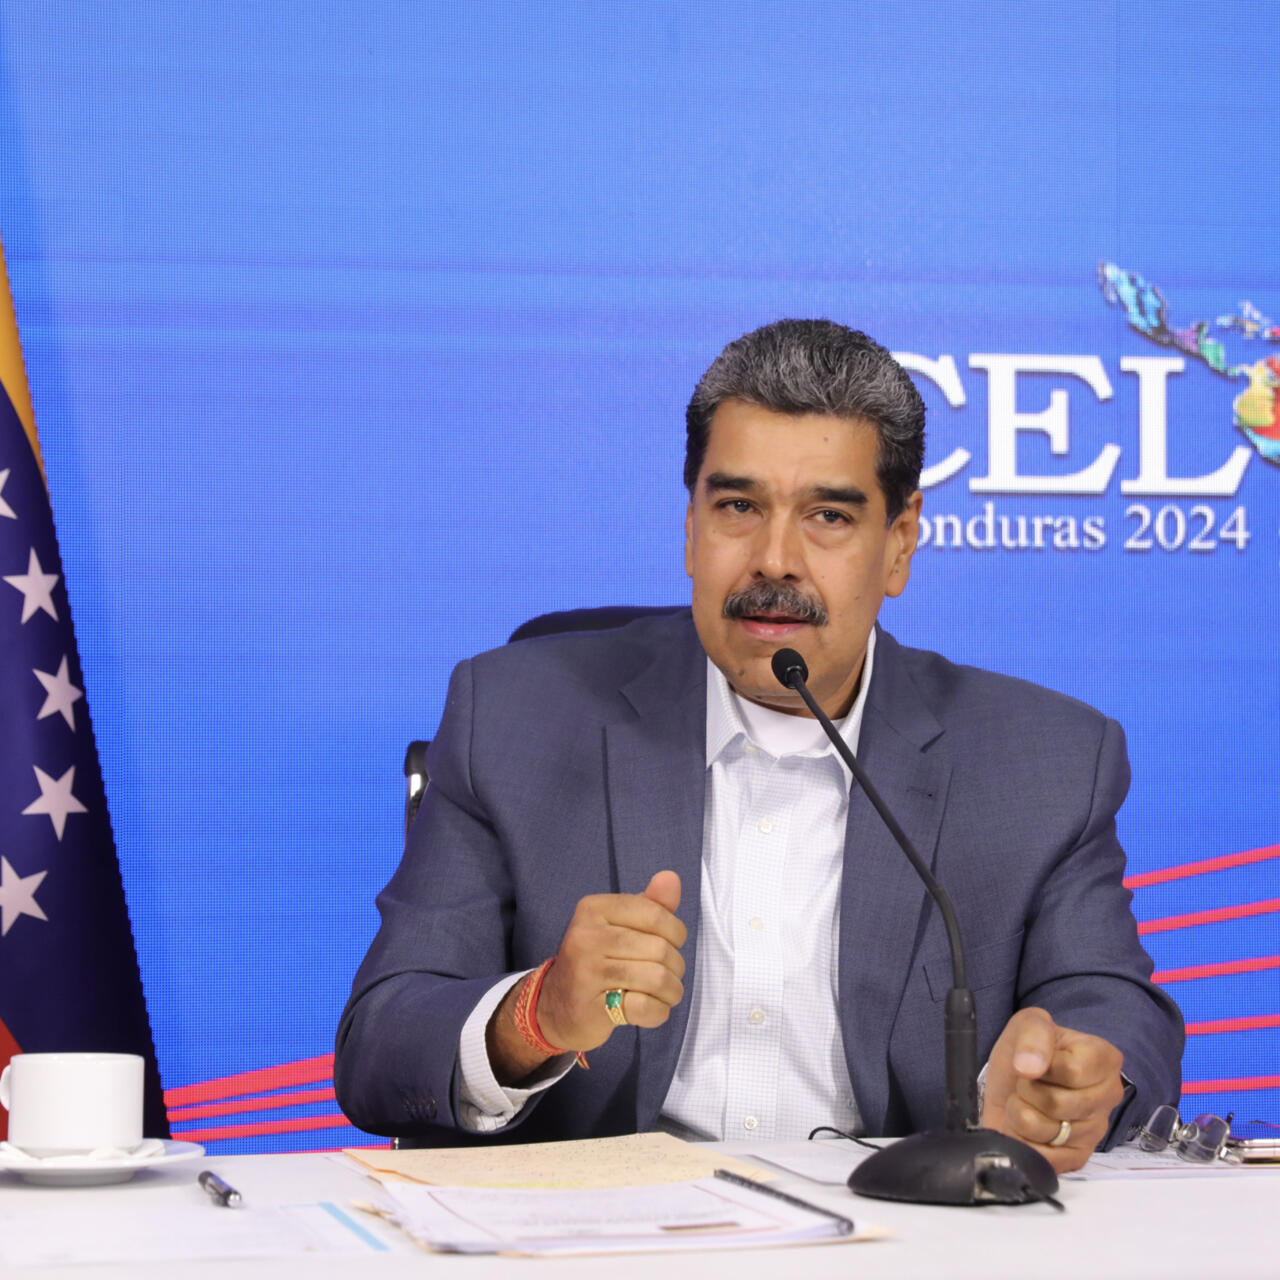 venezuela mbyll ambasadat dhe konsullatat ne ekuador